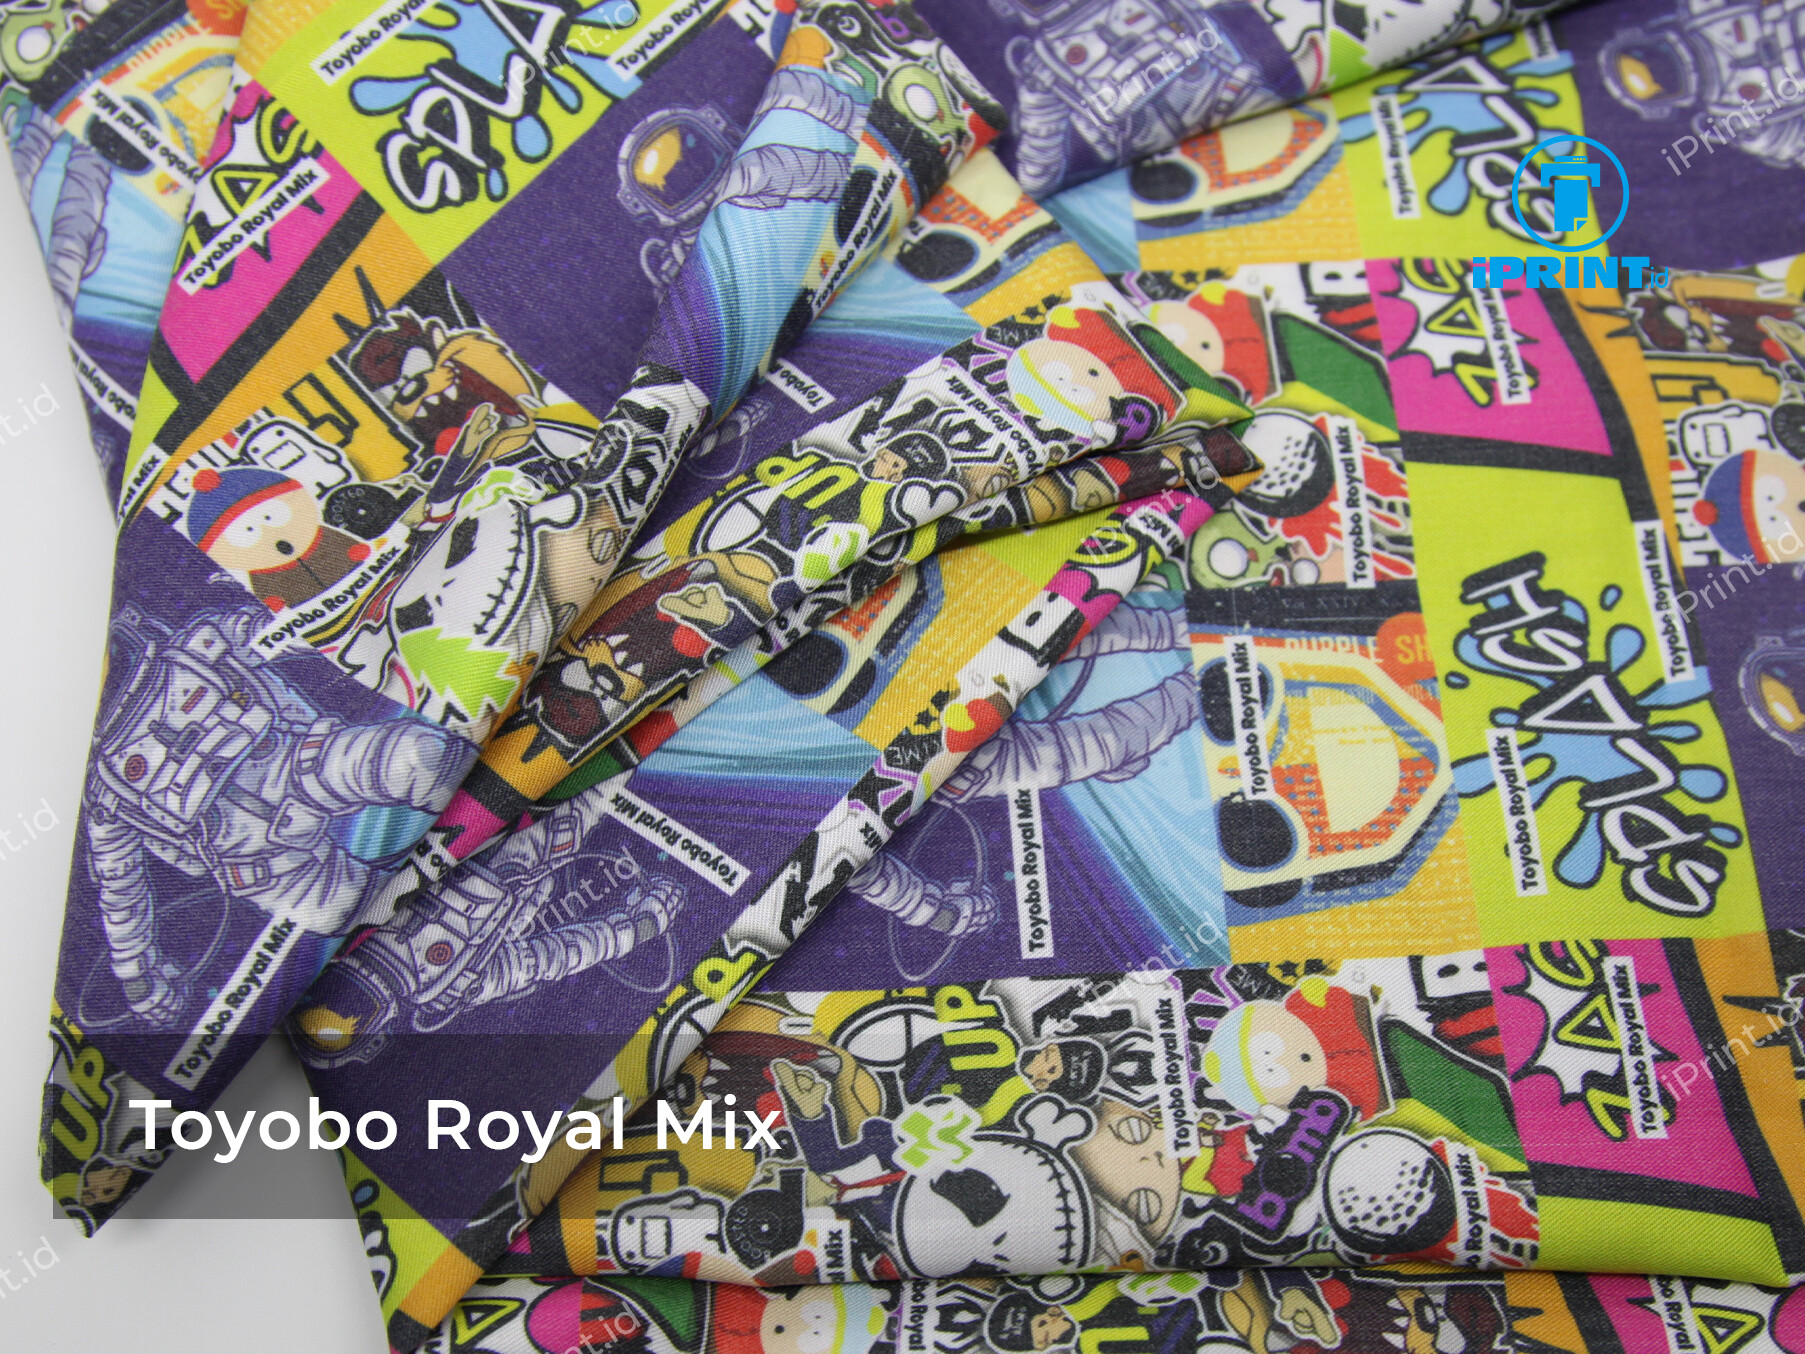 Toyobo Royal Mix 1